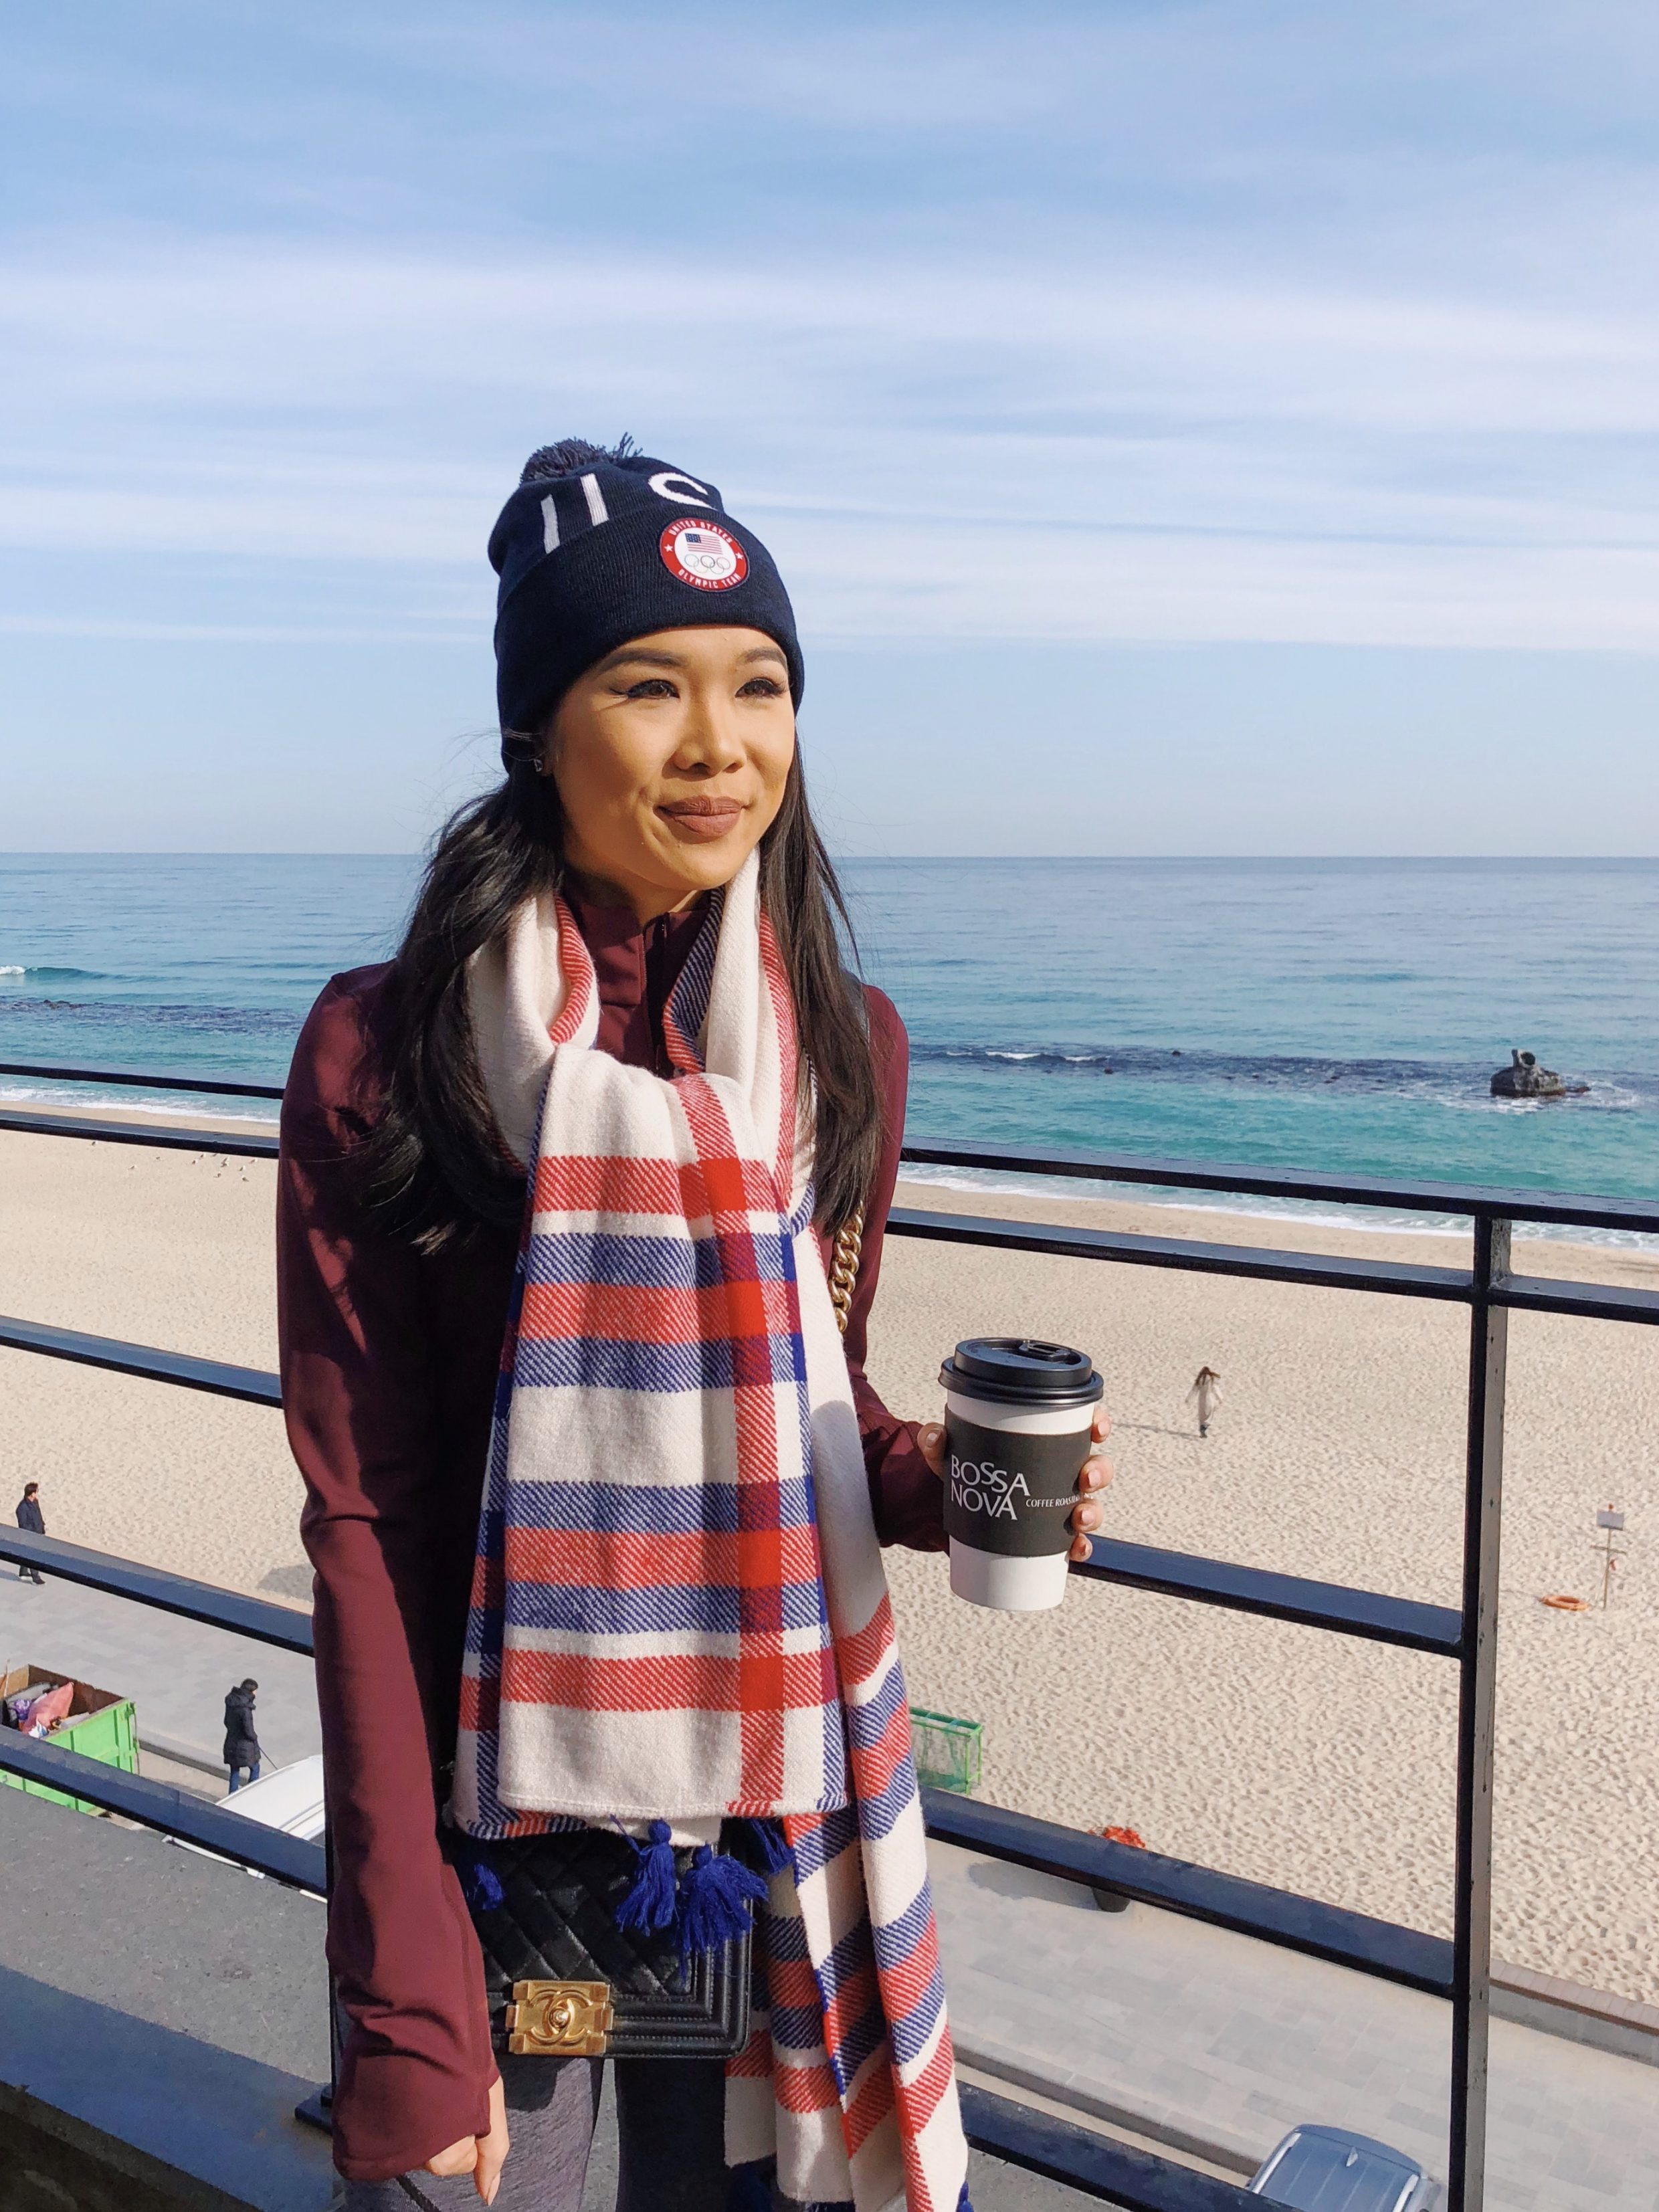 Blogger Hoang-Kim Cung at Anmok Beach in Gangneung, South Korea during the 2018 Olympics